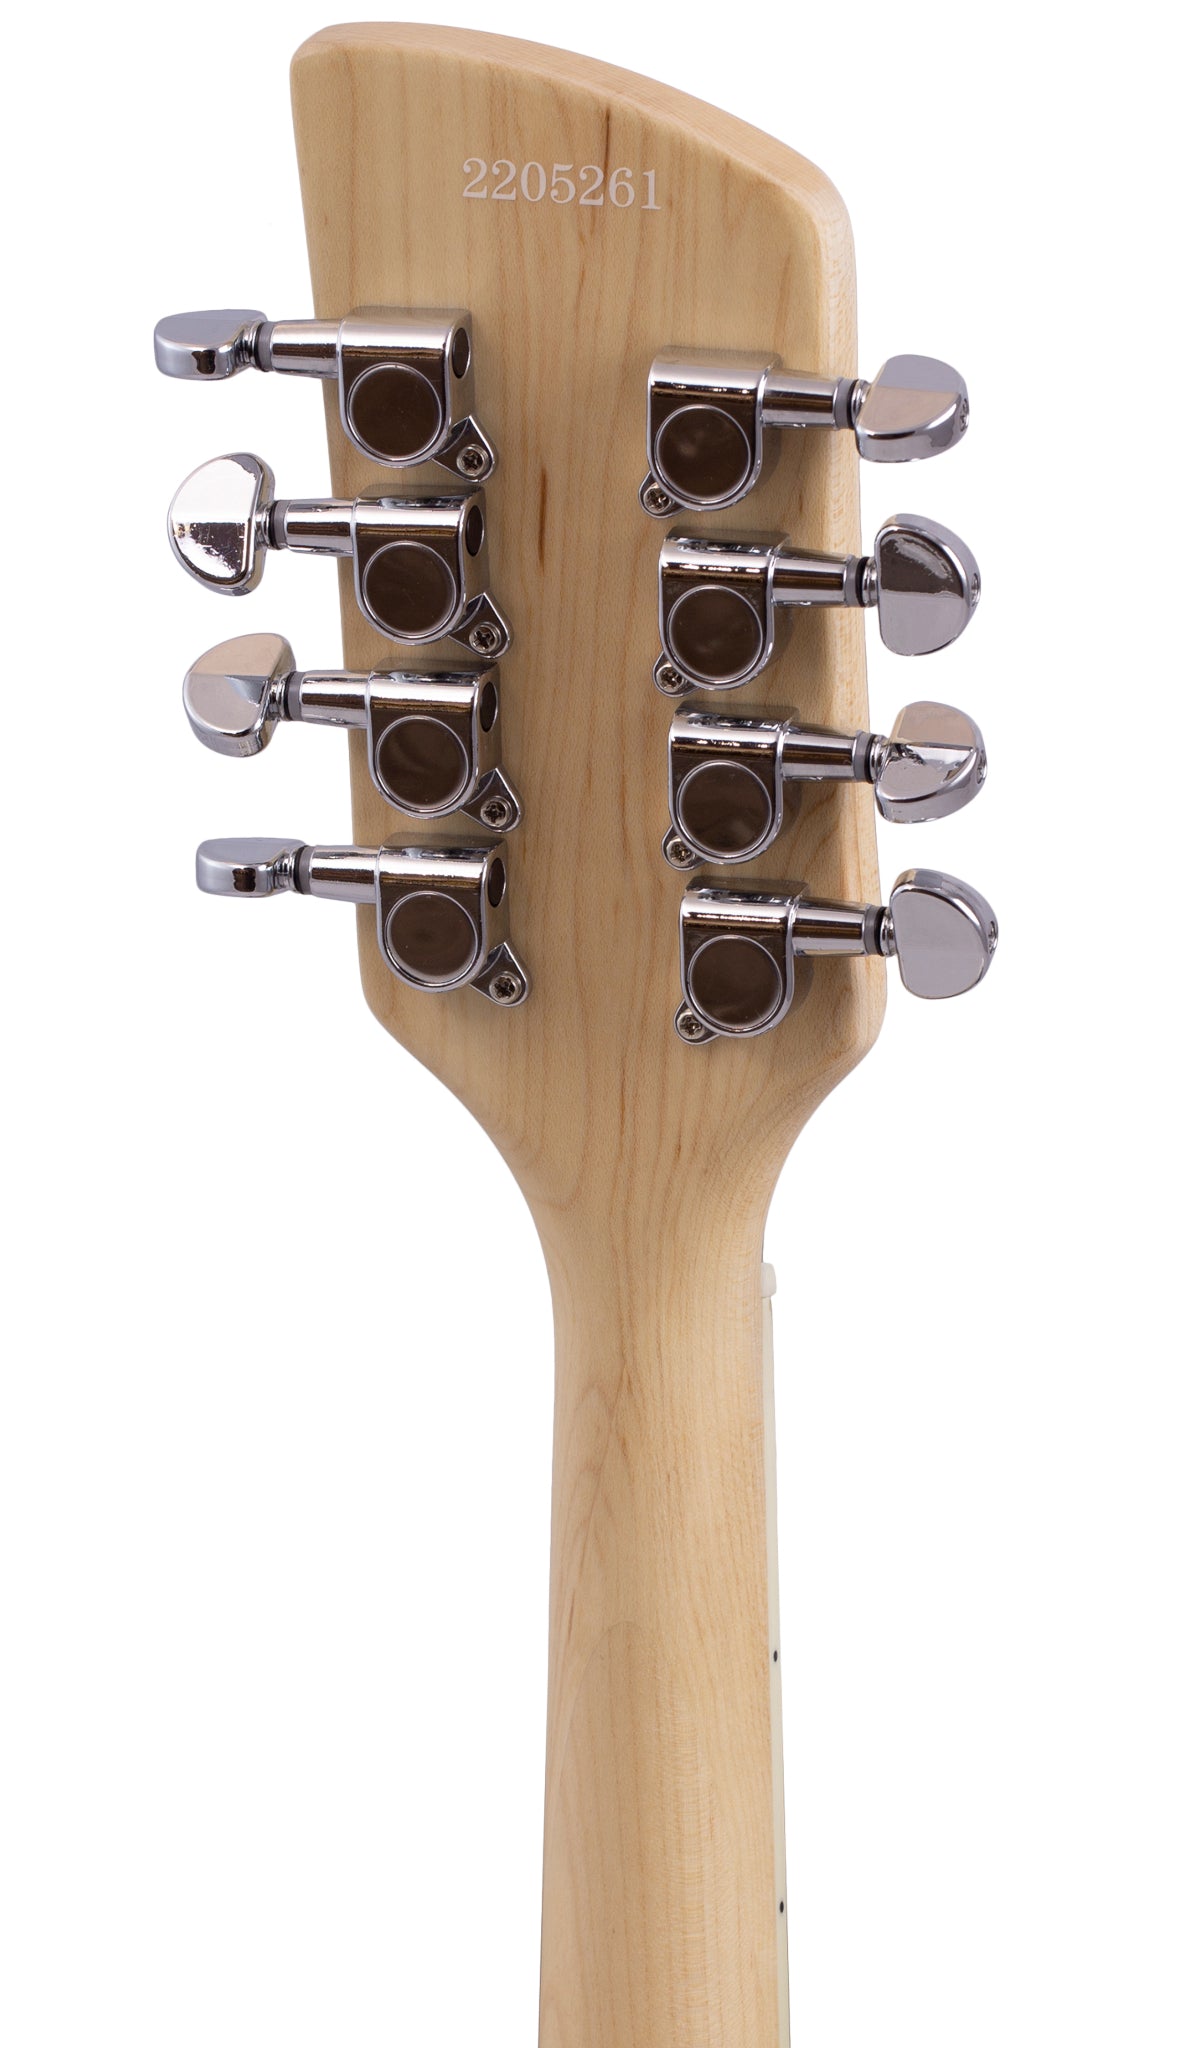 Eastwood Guitars Mandocaster White #color_white